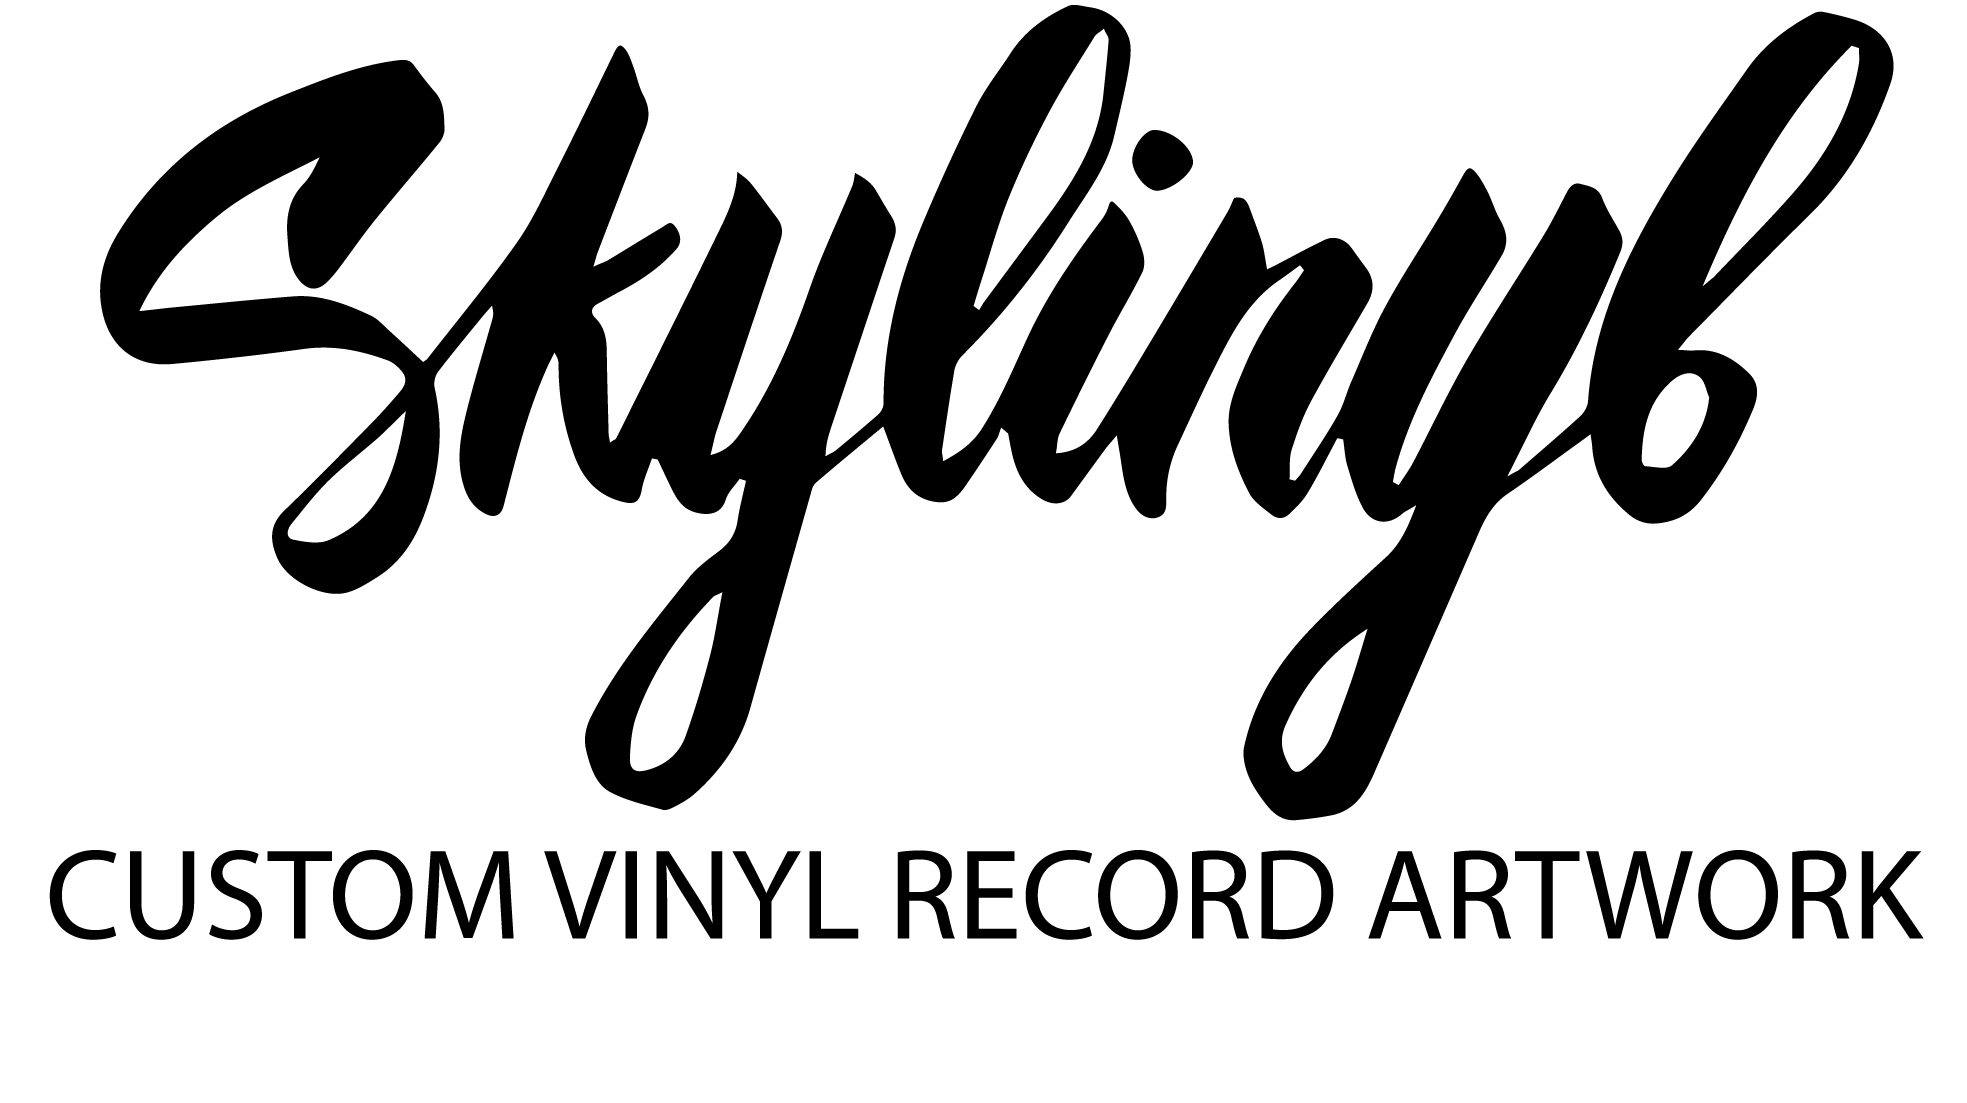 Skylinyl Records